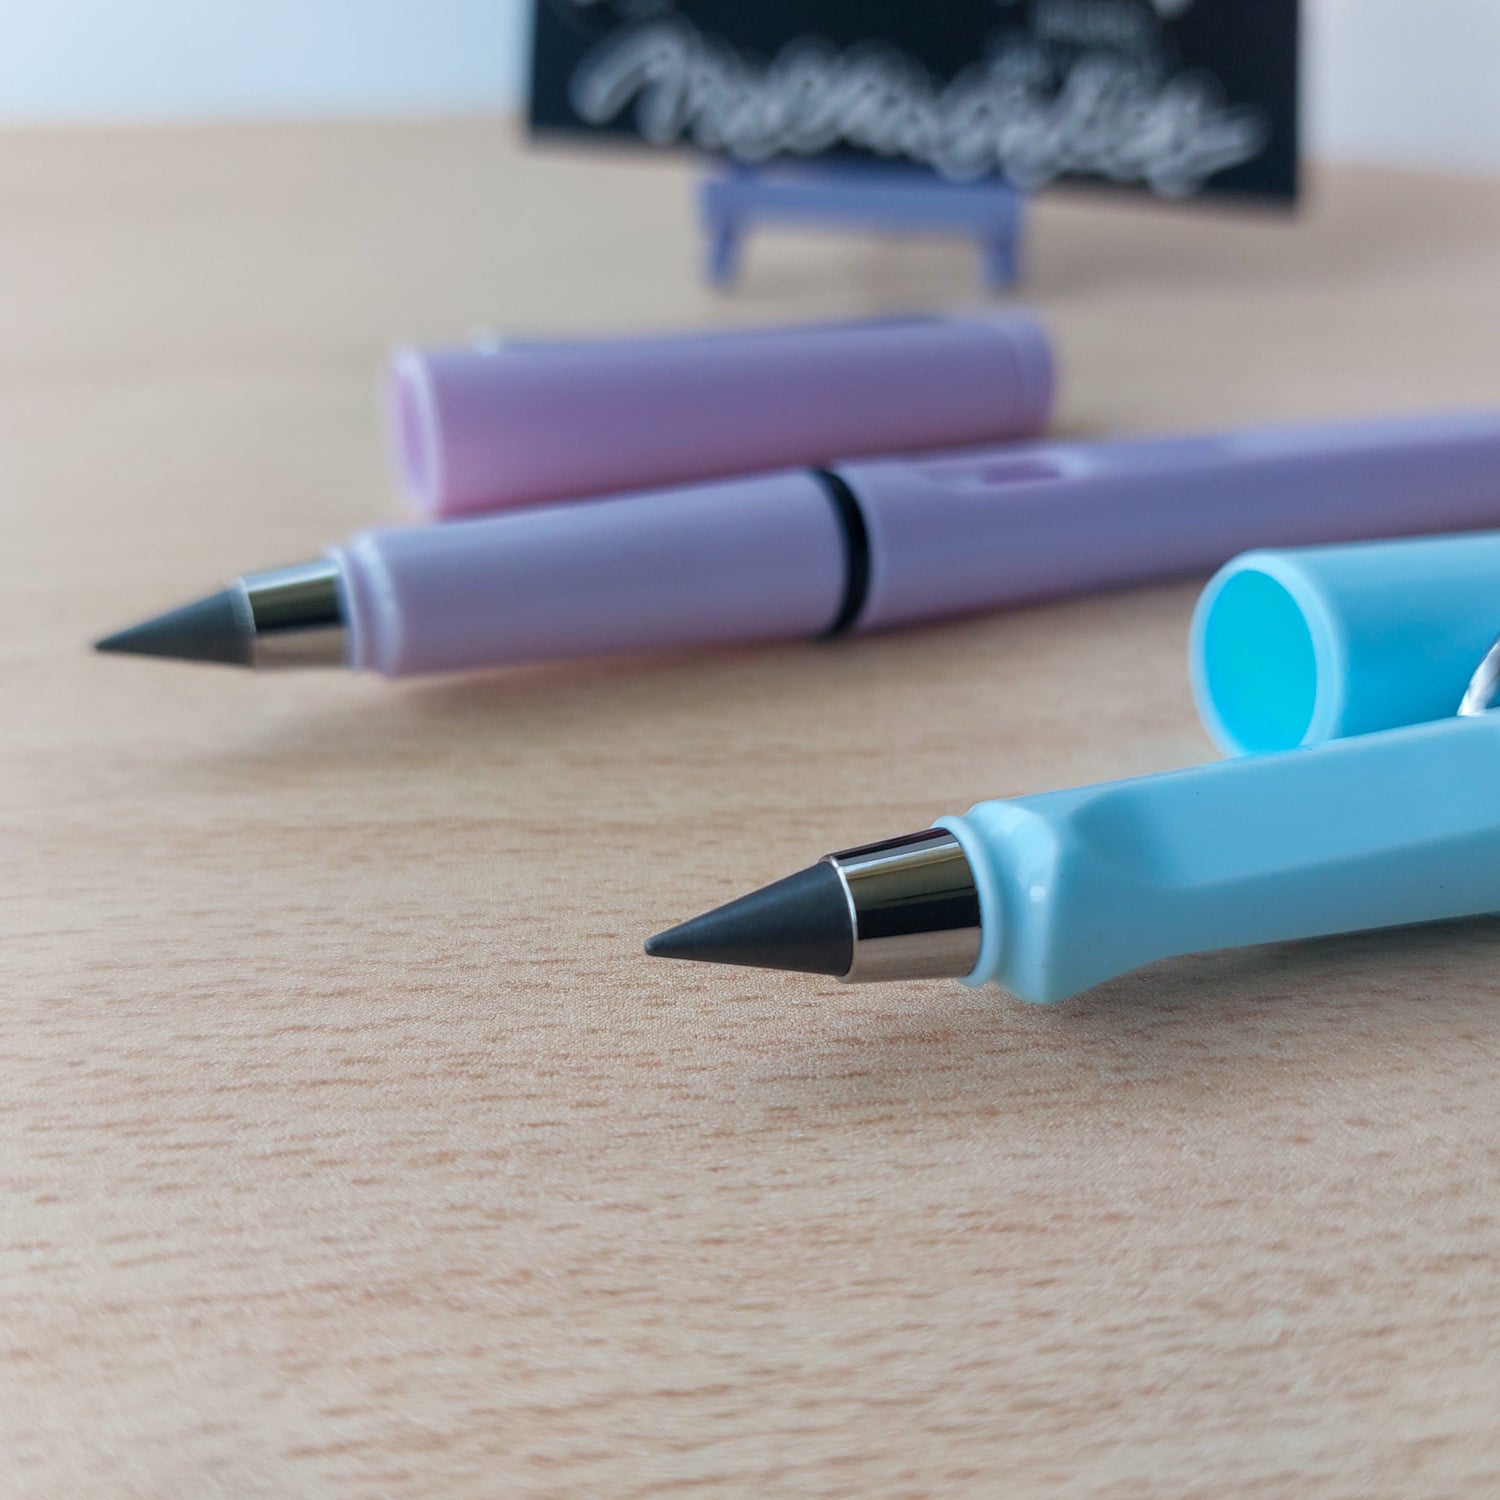 Endless Ink Pencils with Eraser 6pc Set